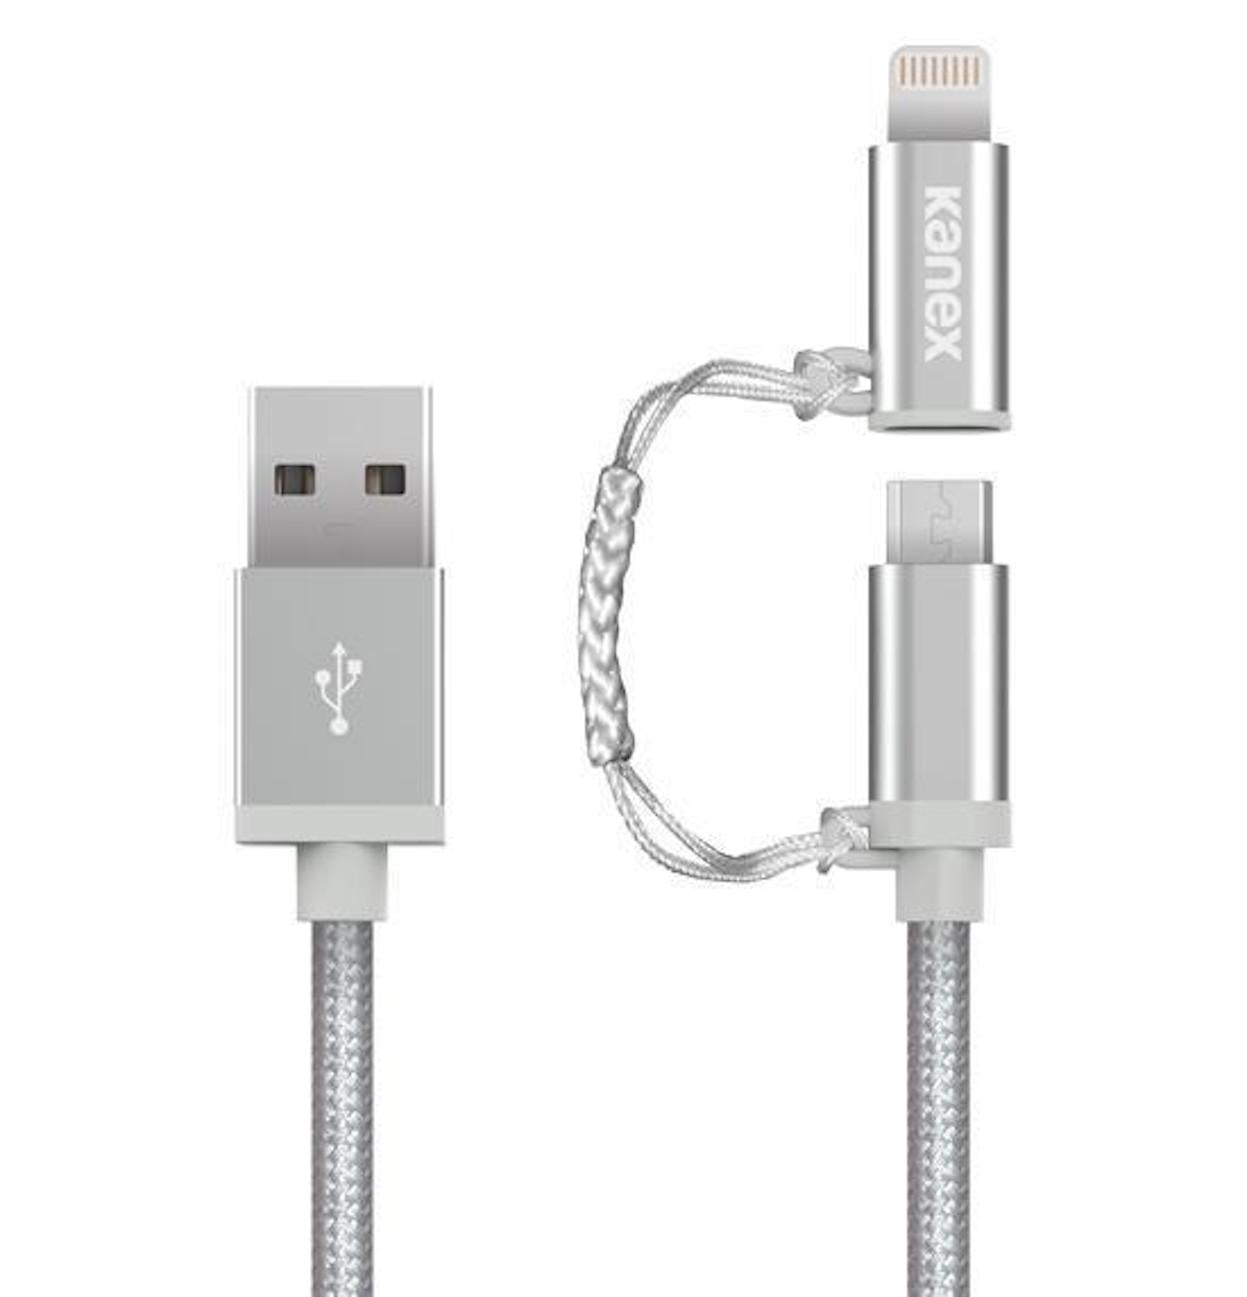 Kanex Premium Lightning Cable And Micro USB Combo - Sliver